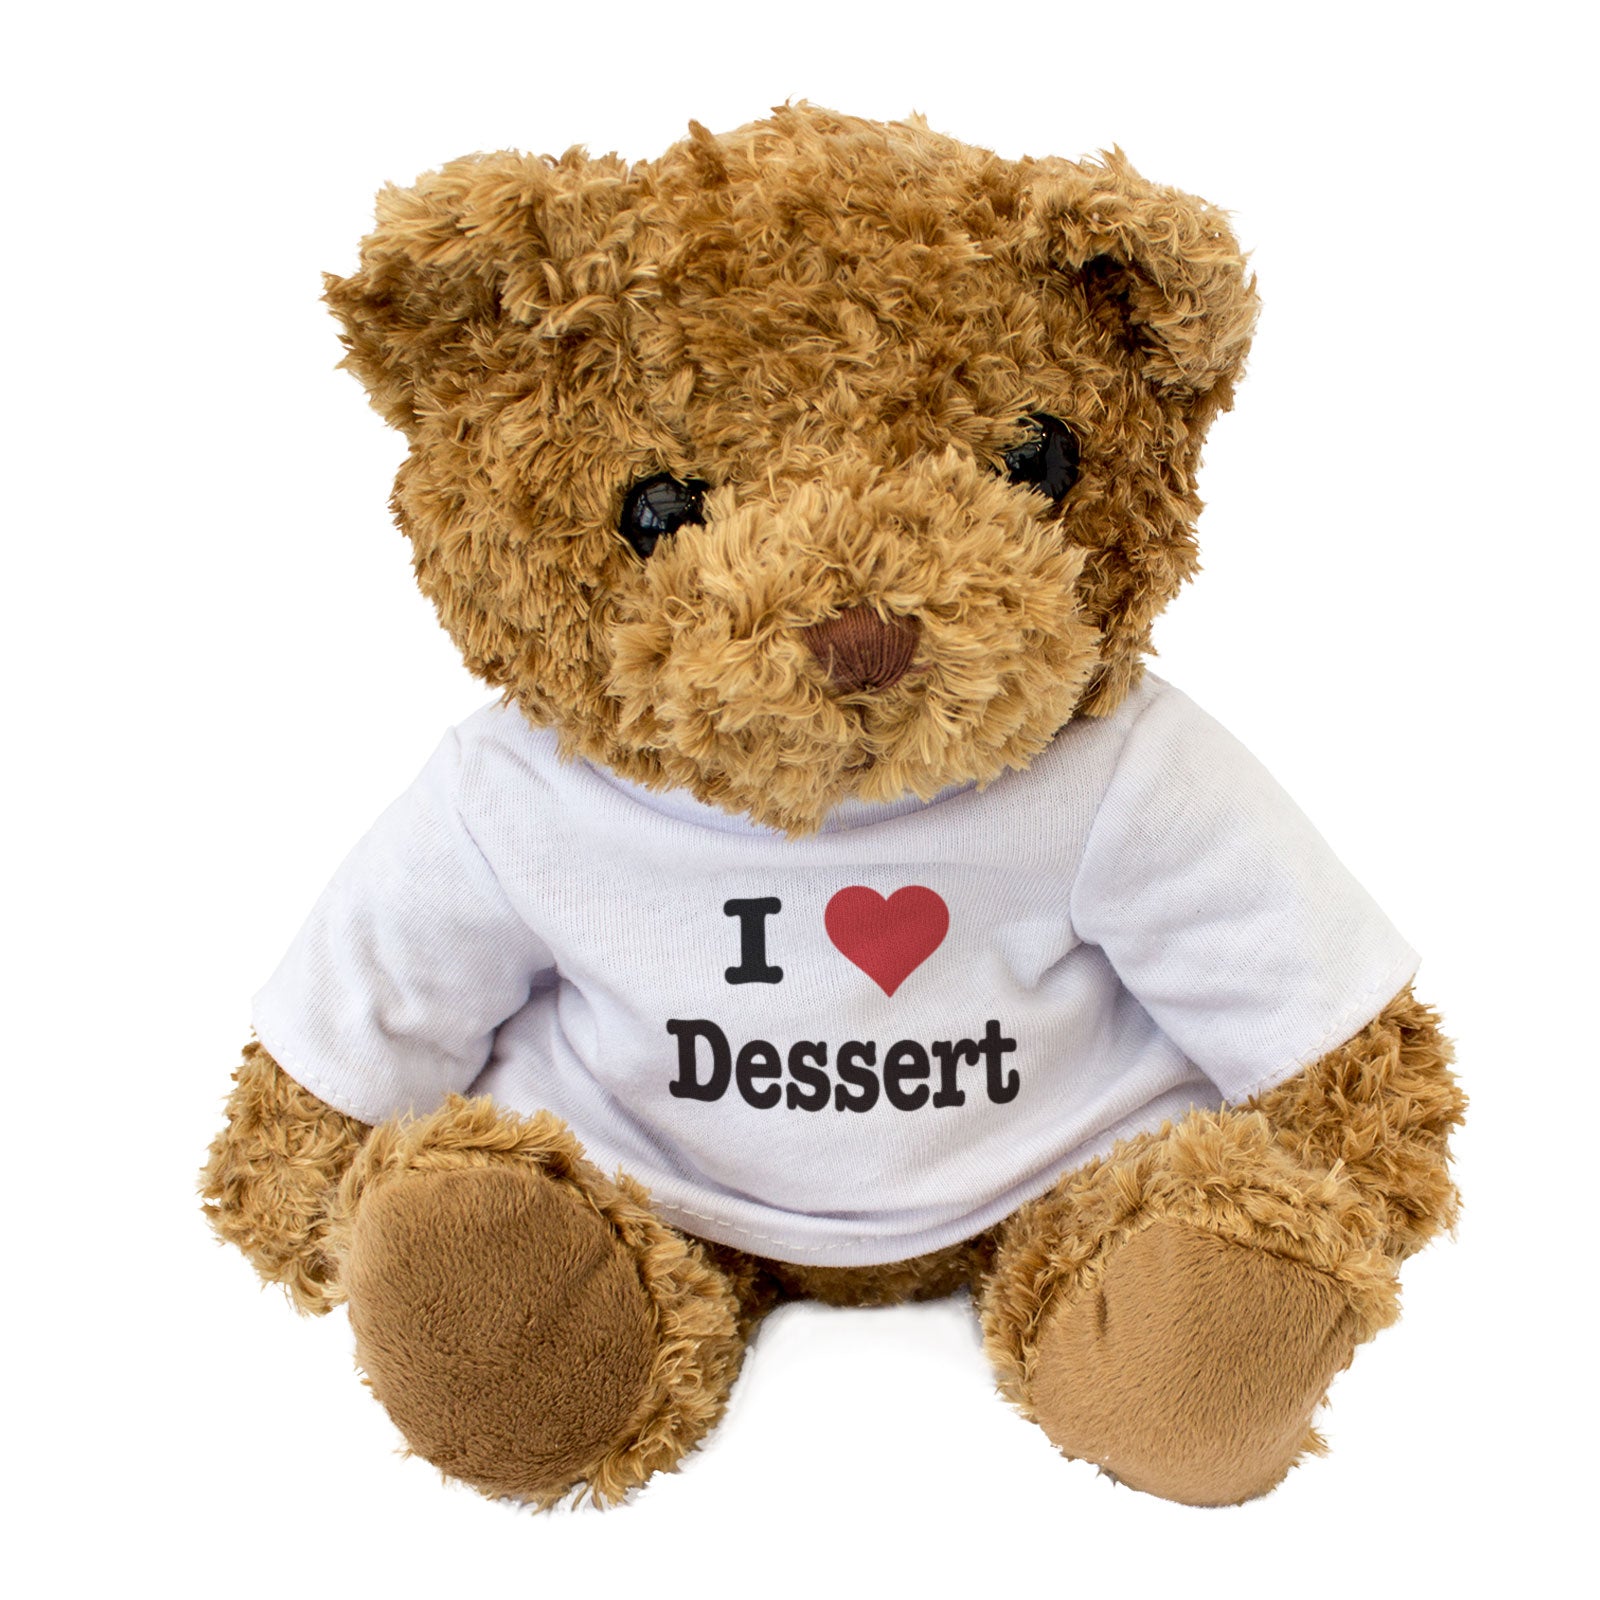 I Love Dessert - Teddy Bear